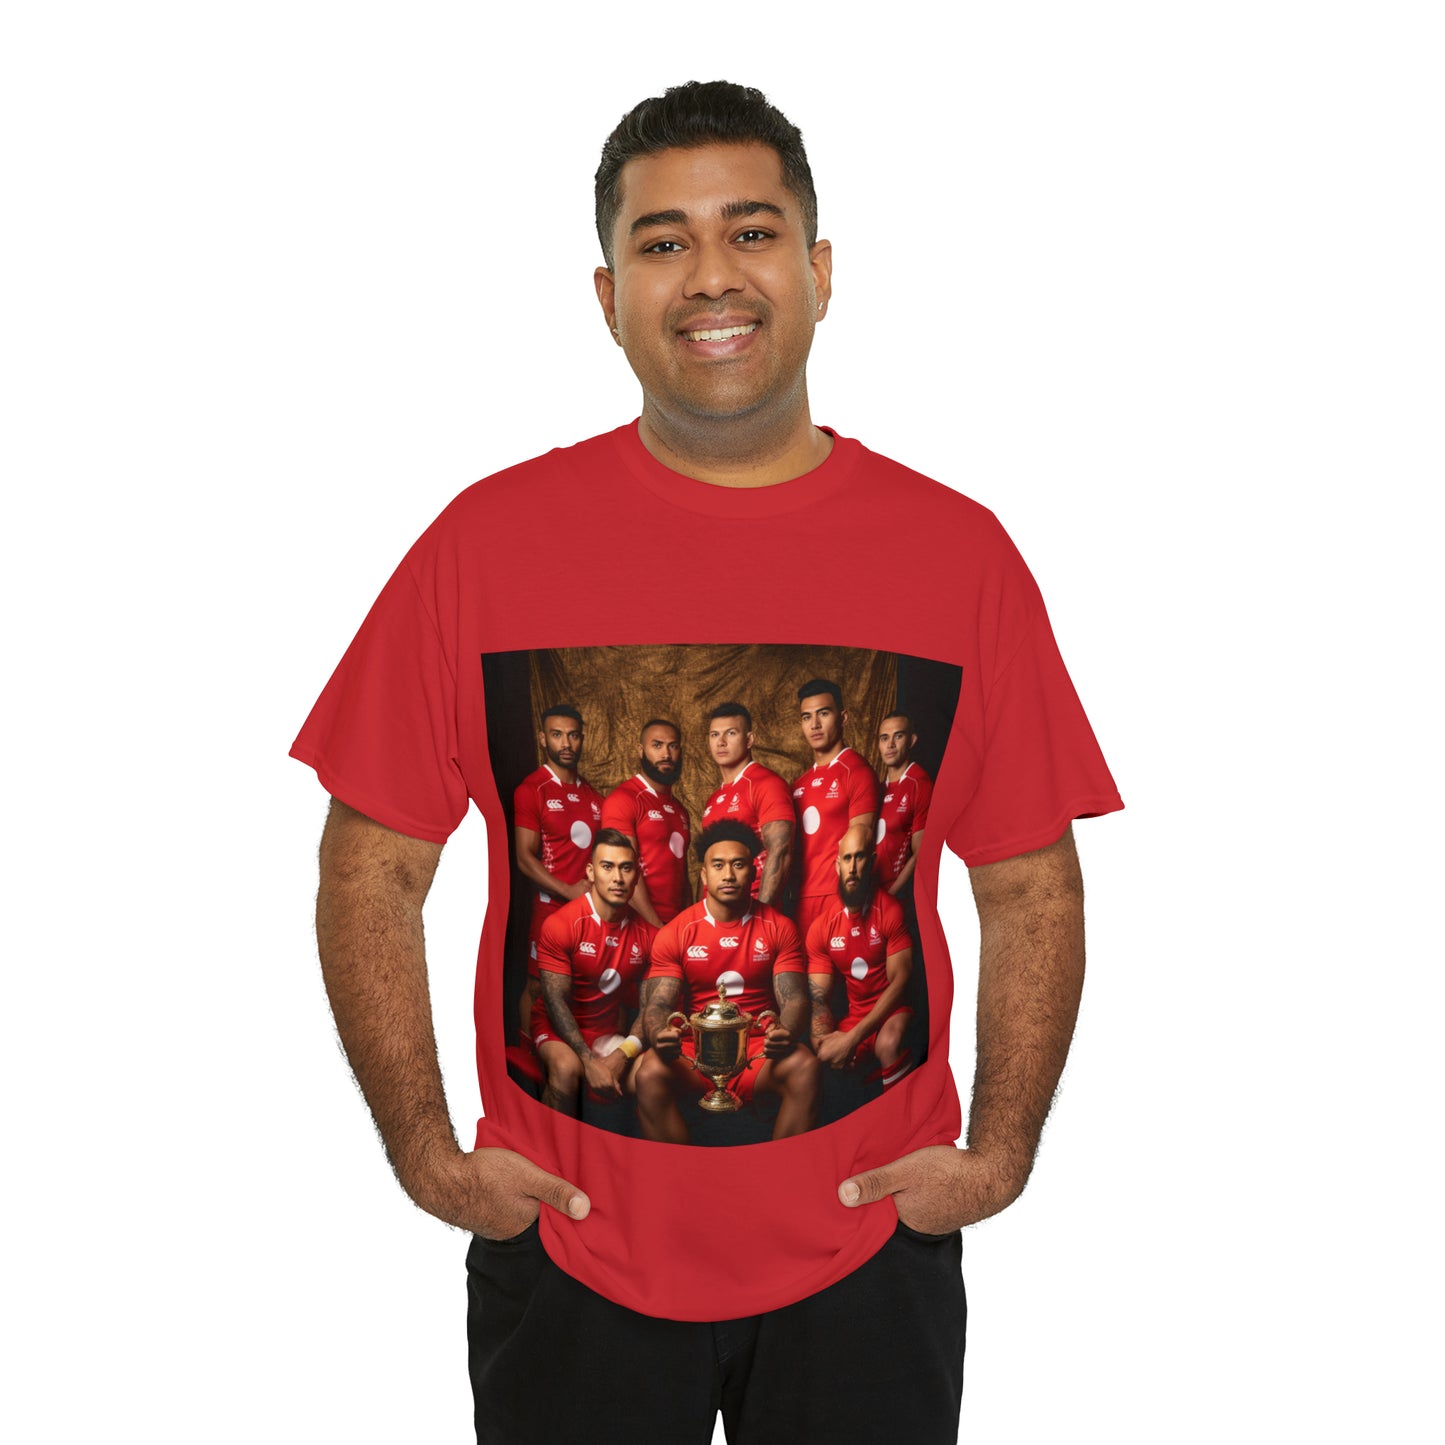 Tonga RWC photoshoot - dark shirts